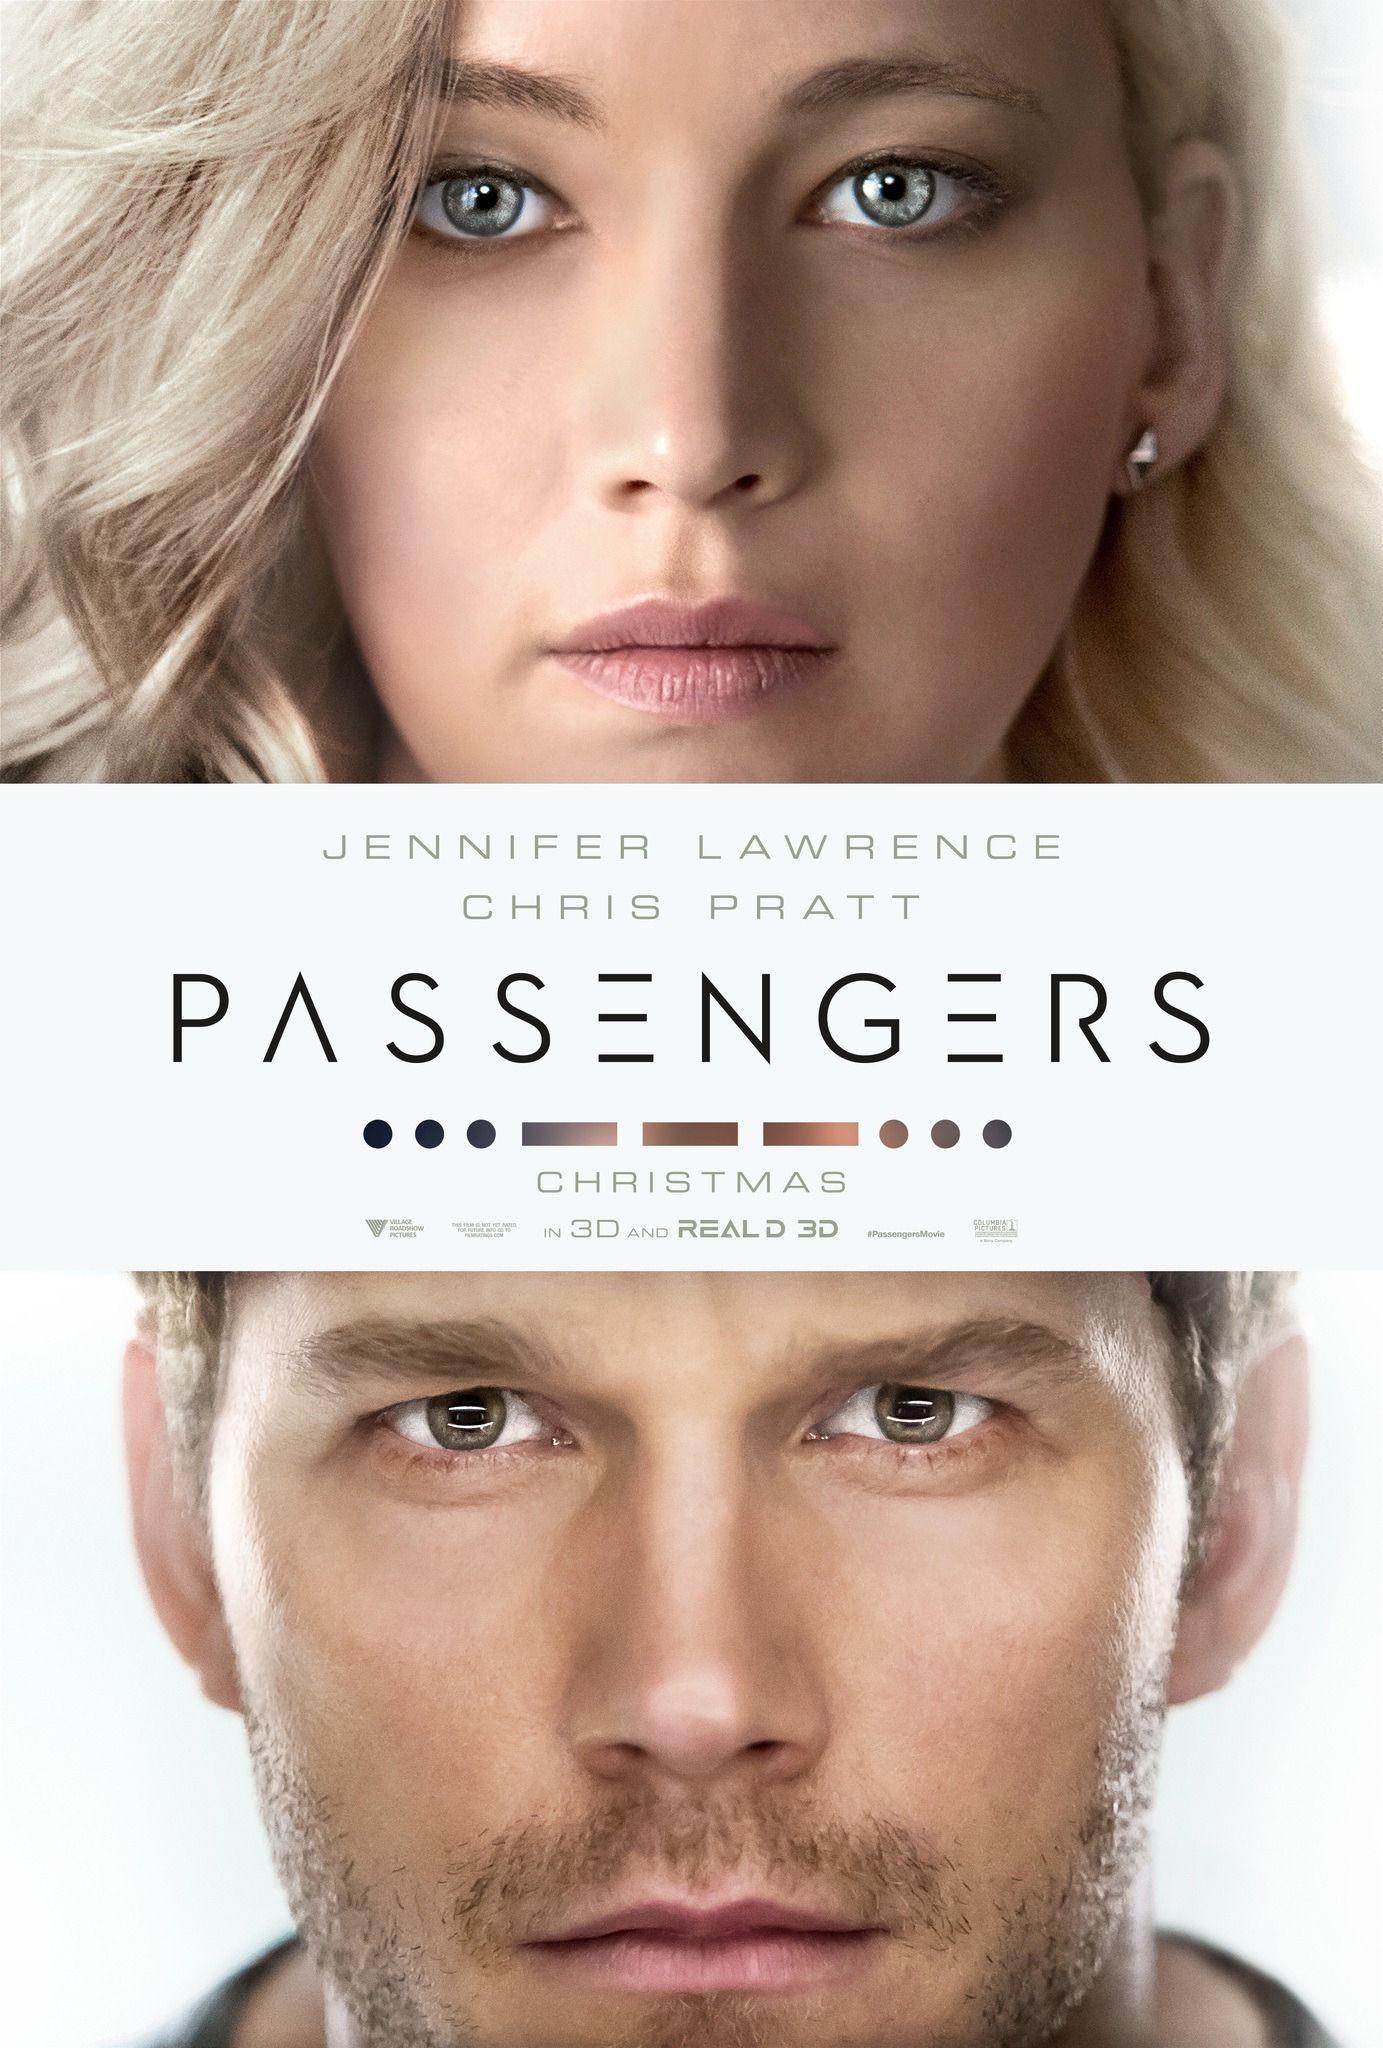 Movie Passengers HD Wallpaper